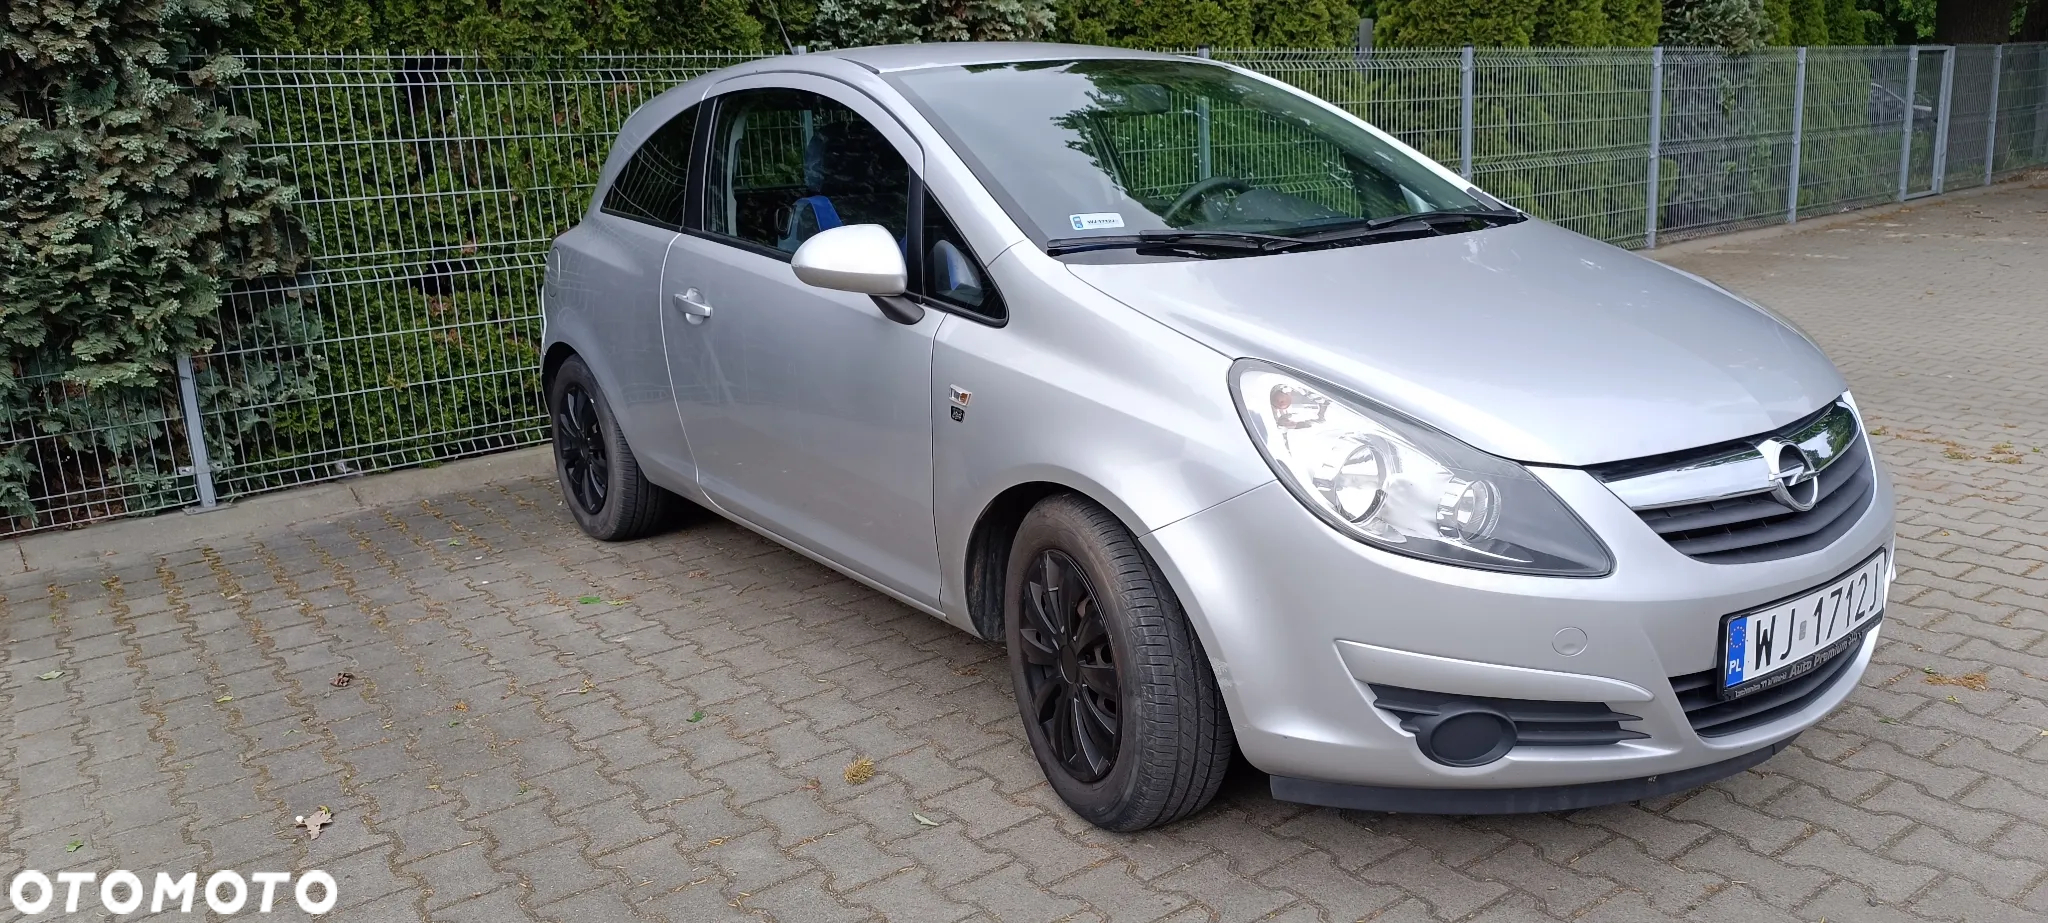 Opel Corsa 1.2 16V 111 - 3